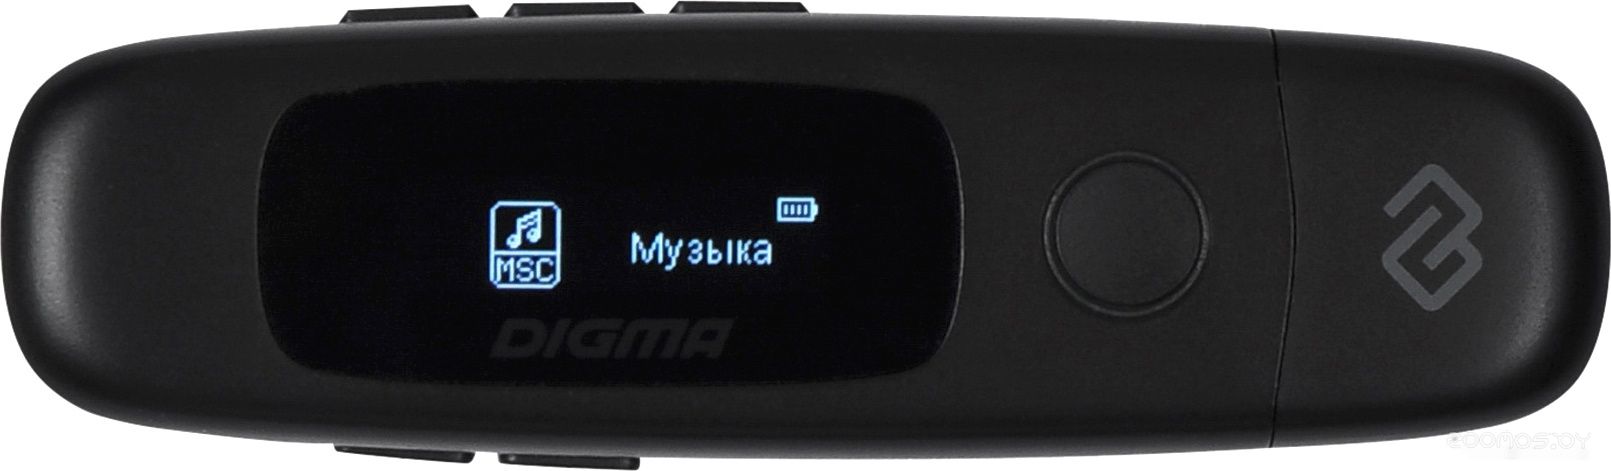 Плеер MP3 DIGMA U4 8GB